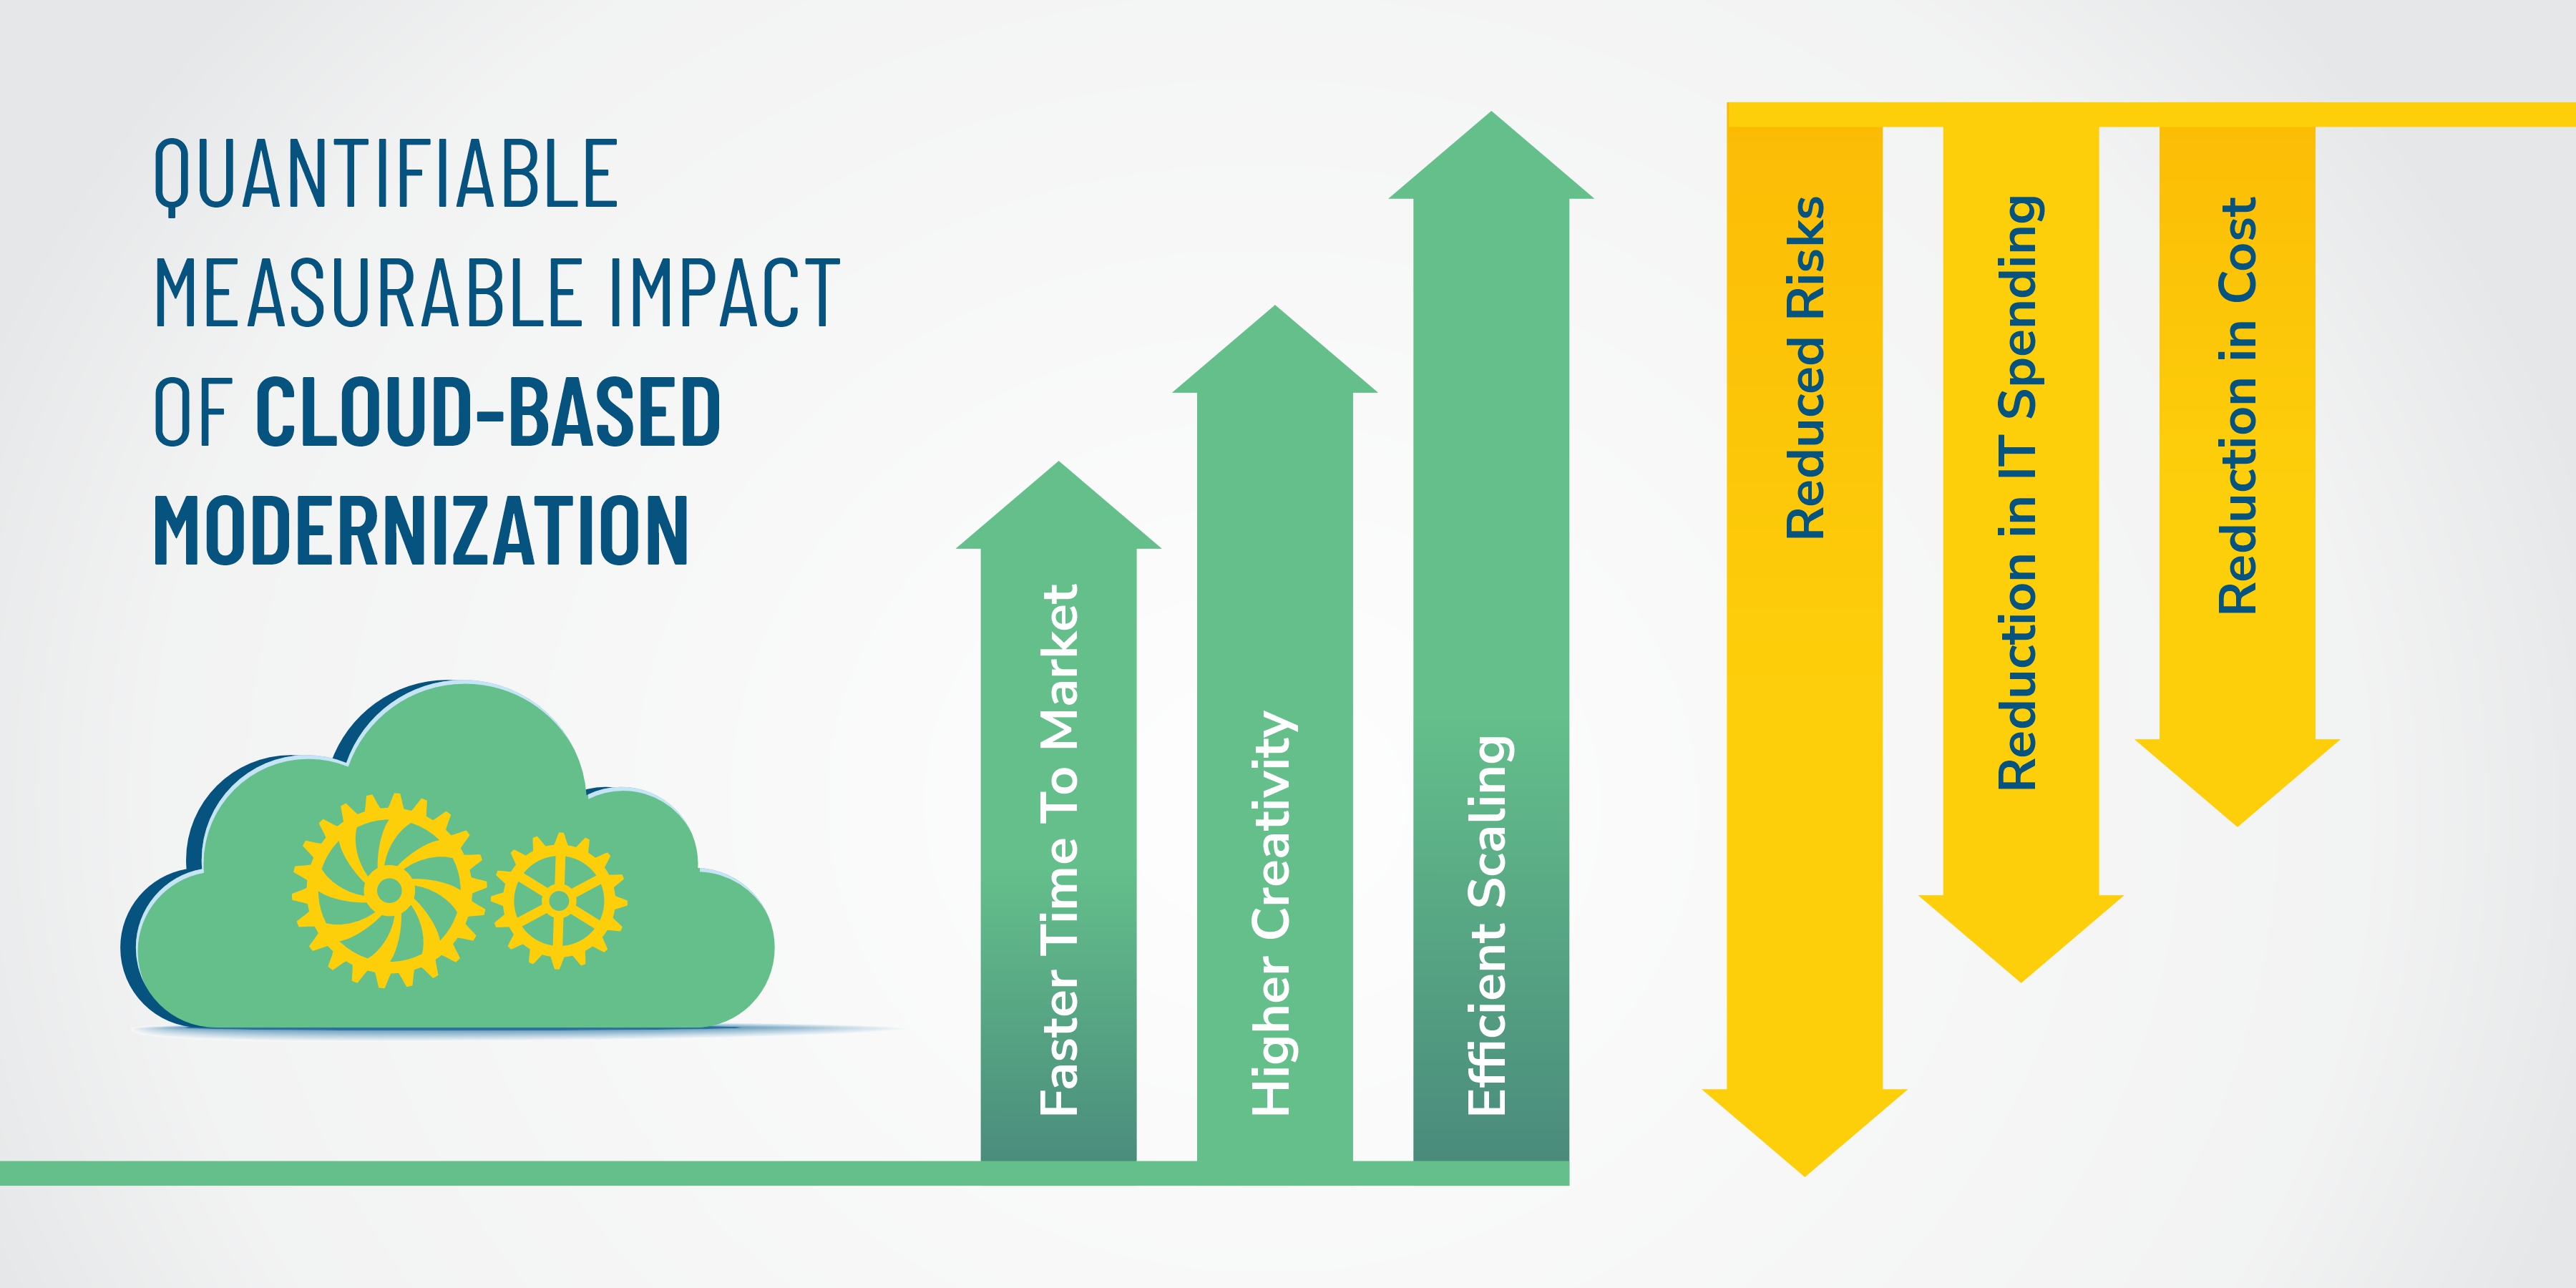 Quantifiable measurable impact of cloud-based modernization